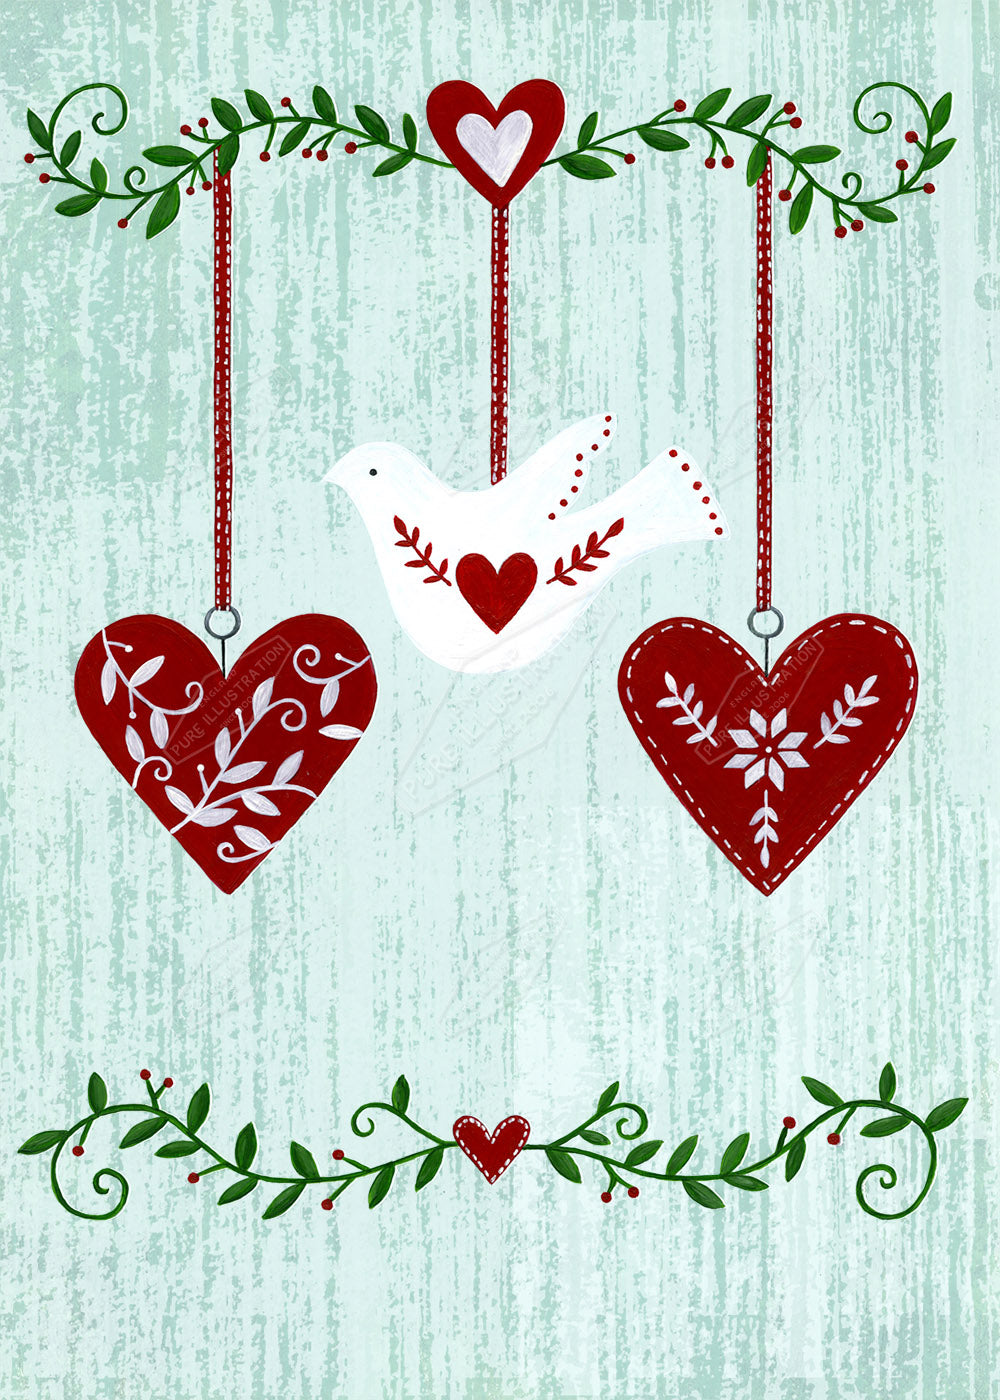 00026859AAI - Folk Christmas Decorations by Anna Aitken - Pure Surface Design Studio